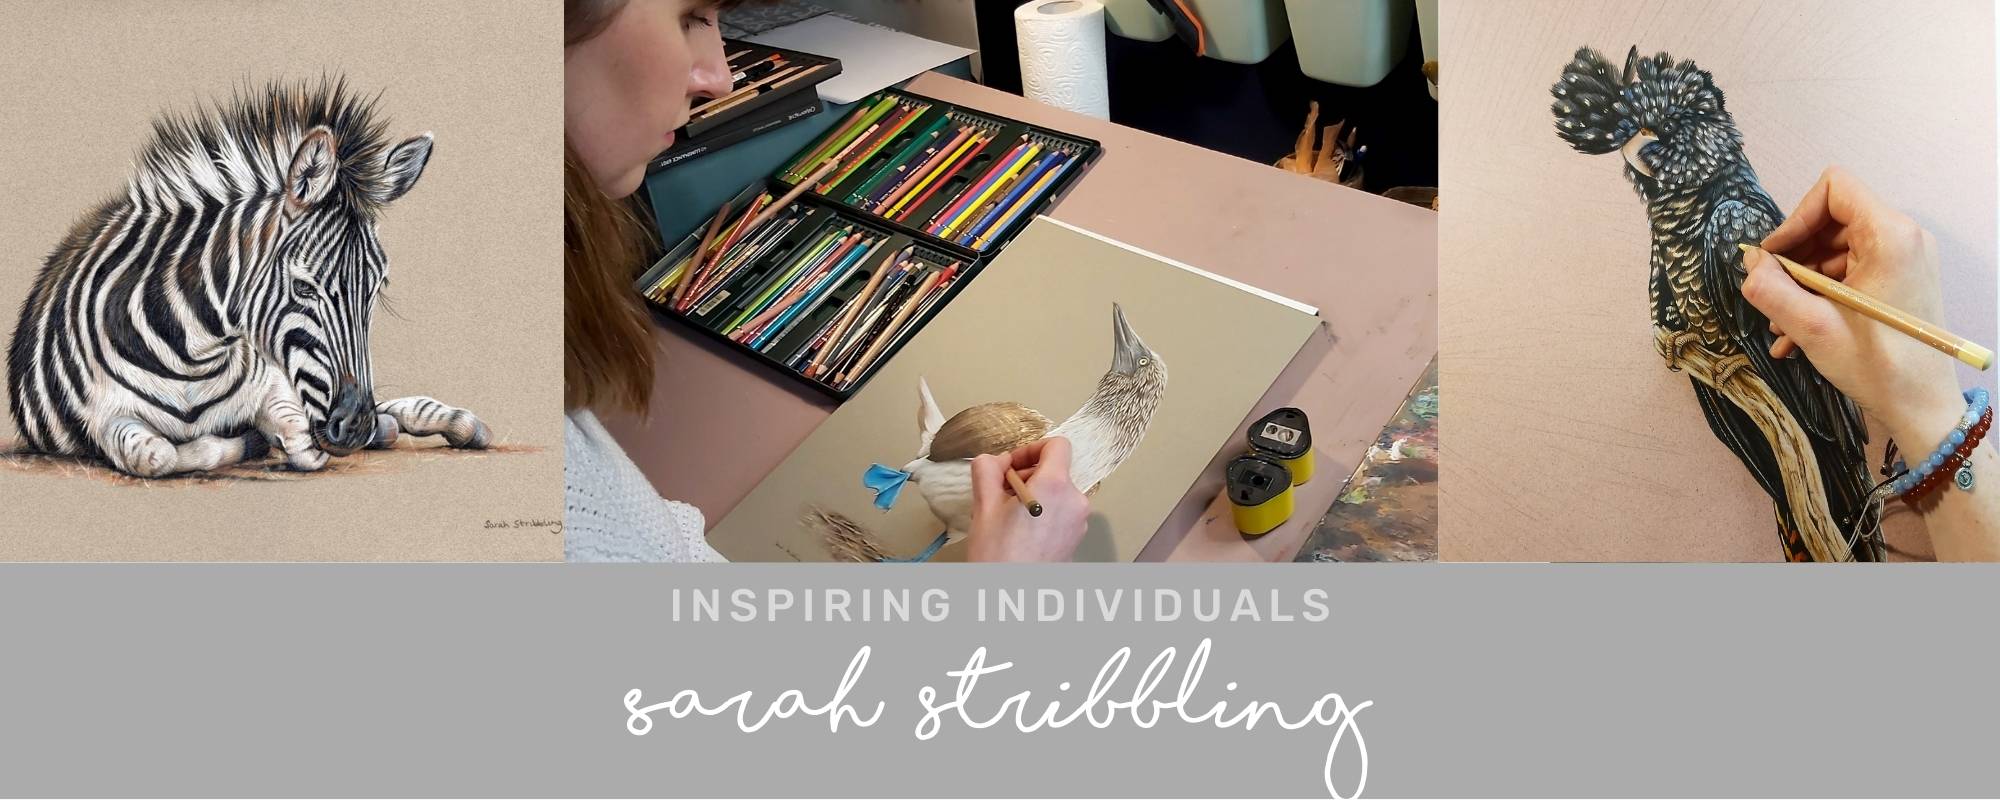 INSPIRING INDIVIDUAL: Sarah Stribbling